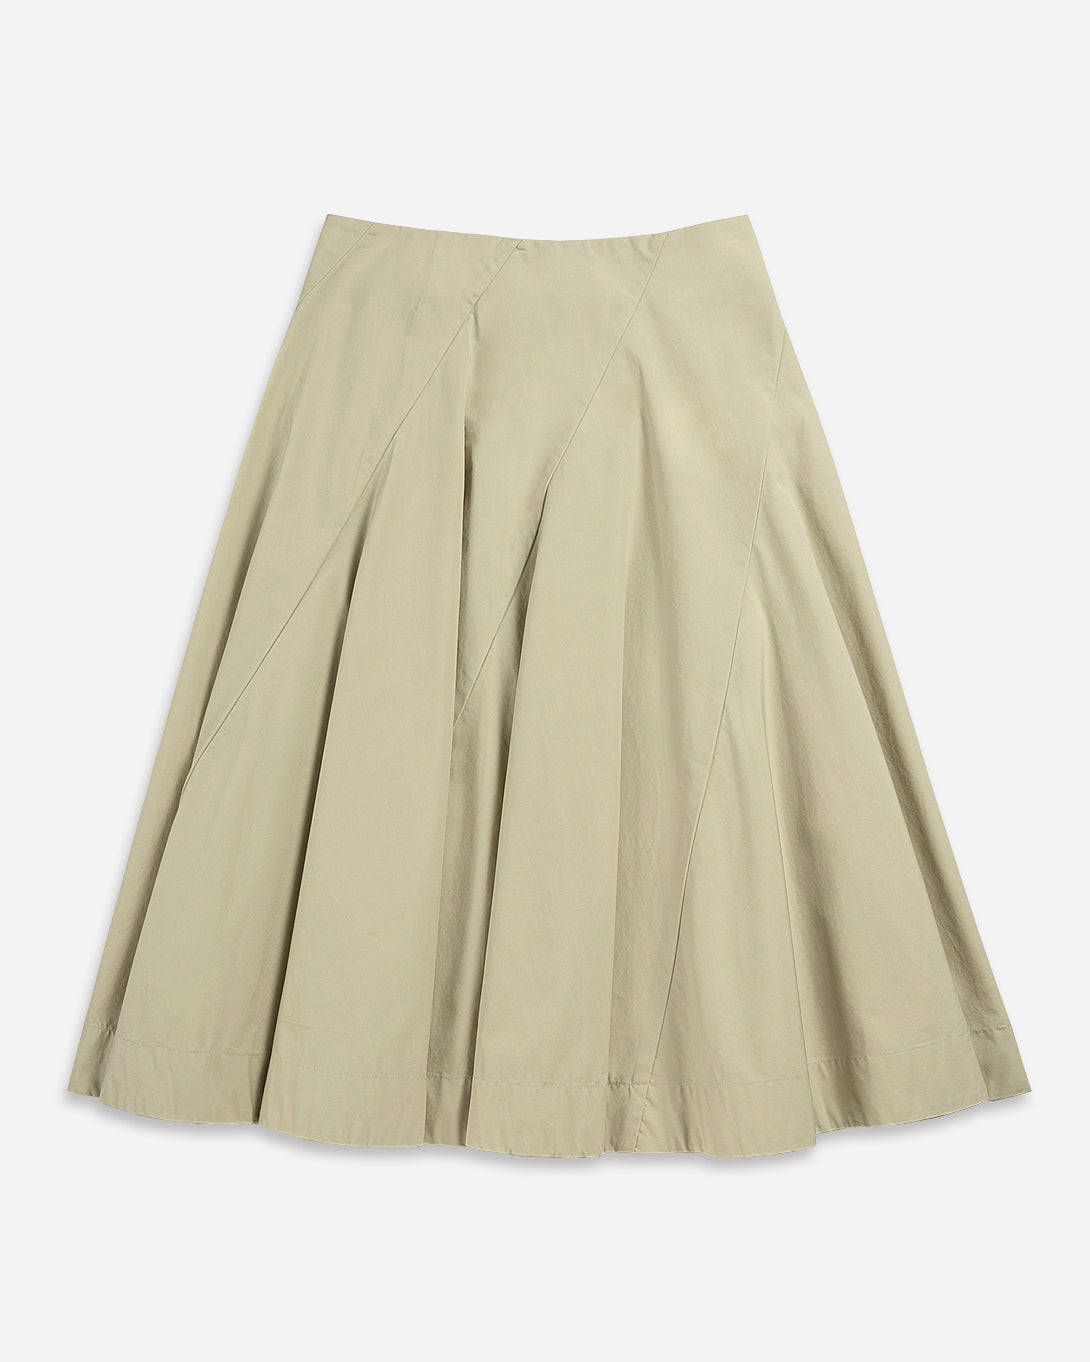 Pumice Stone Spiral Skirt Womens Mid Length Skirt 